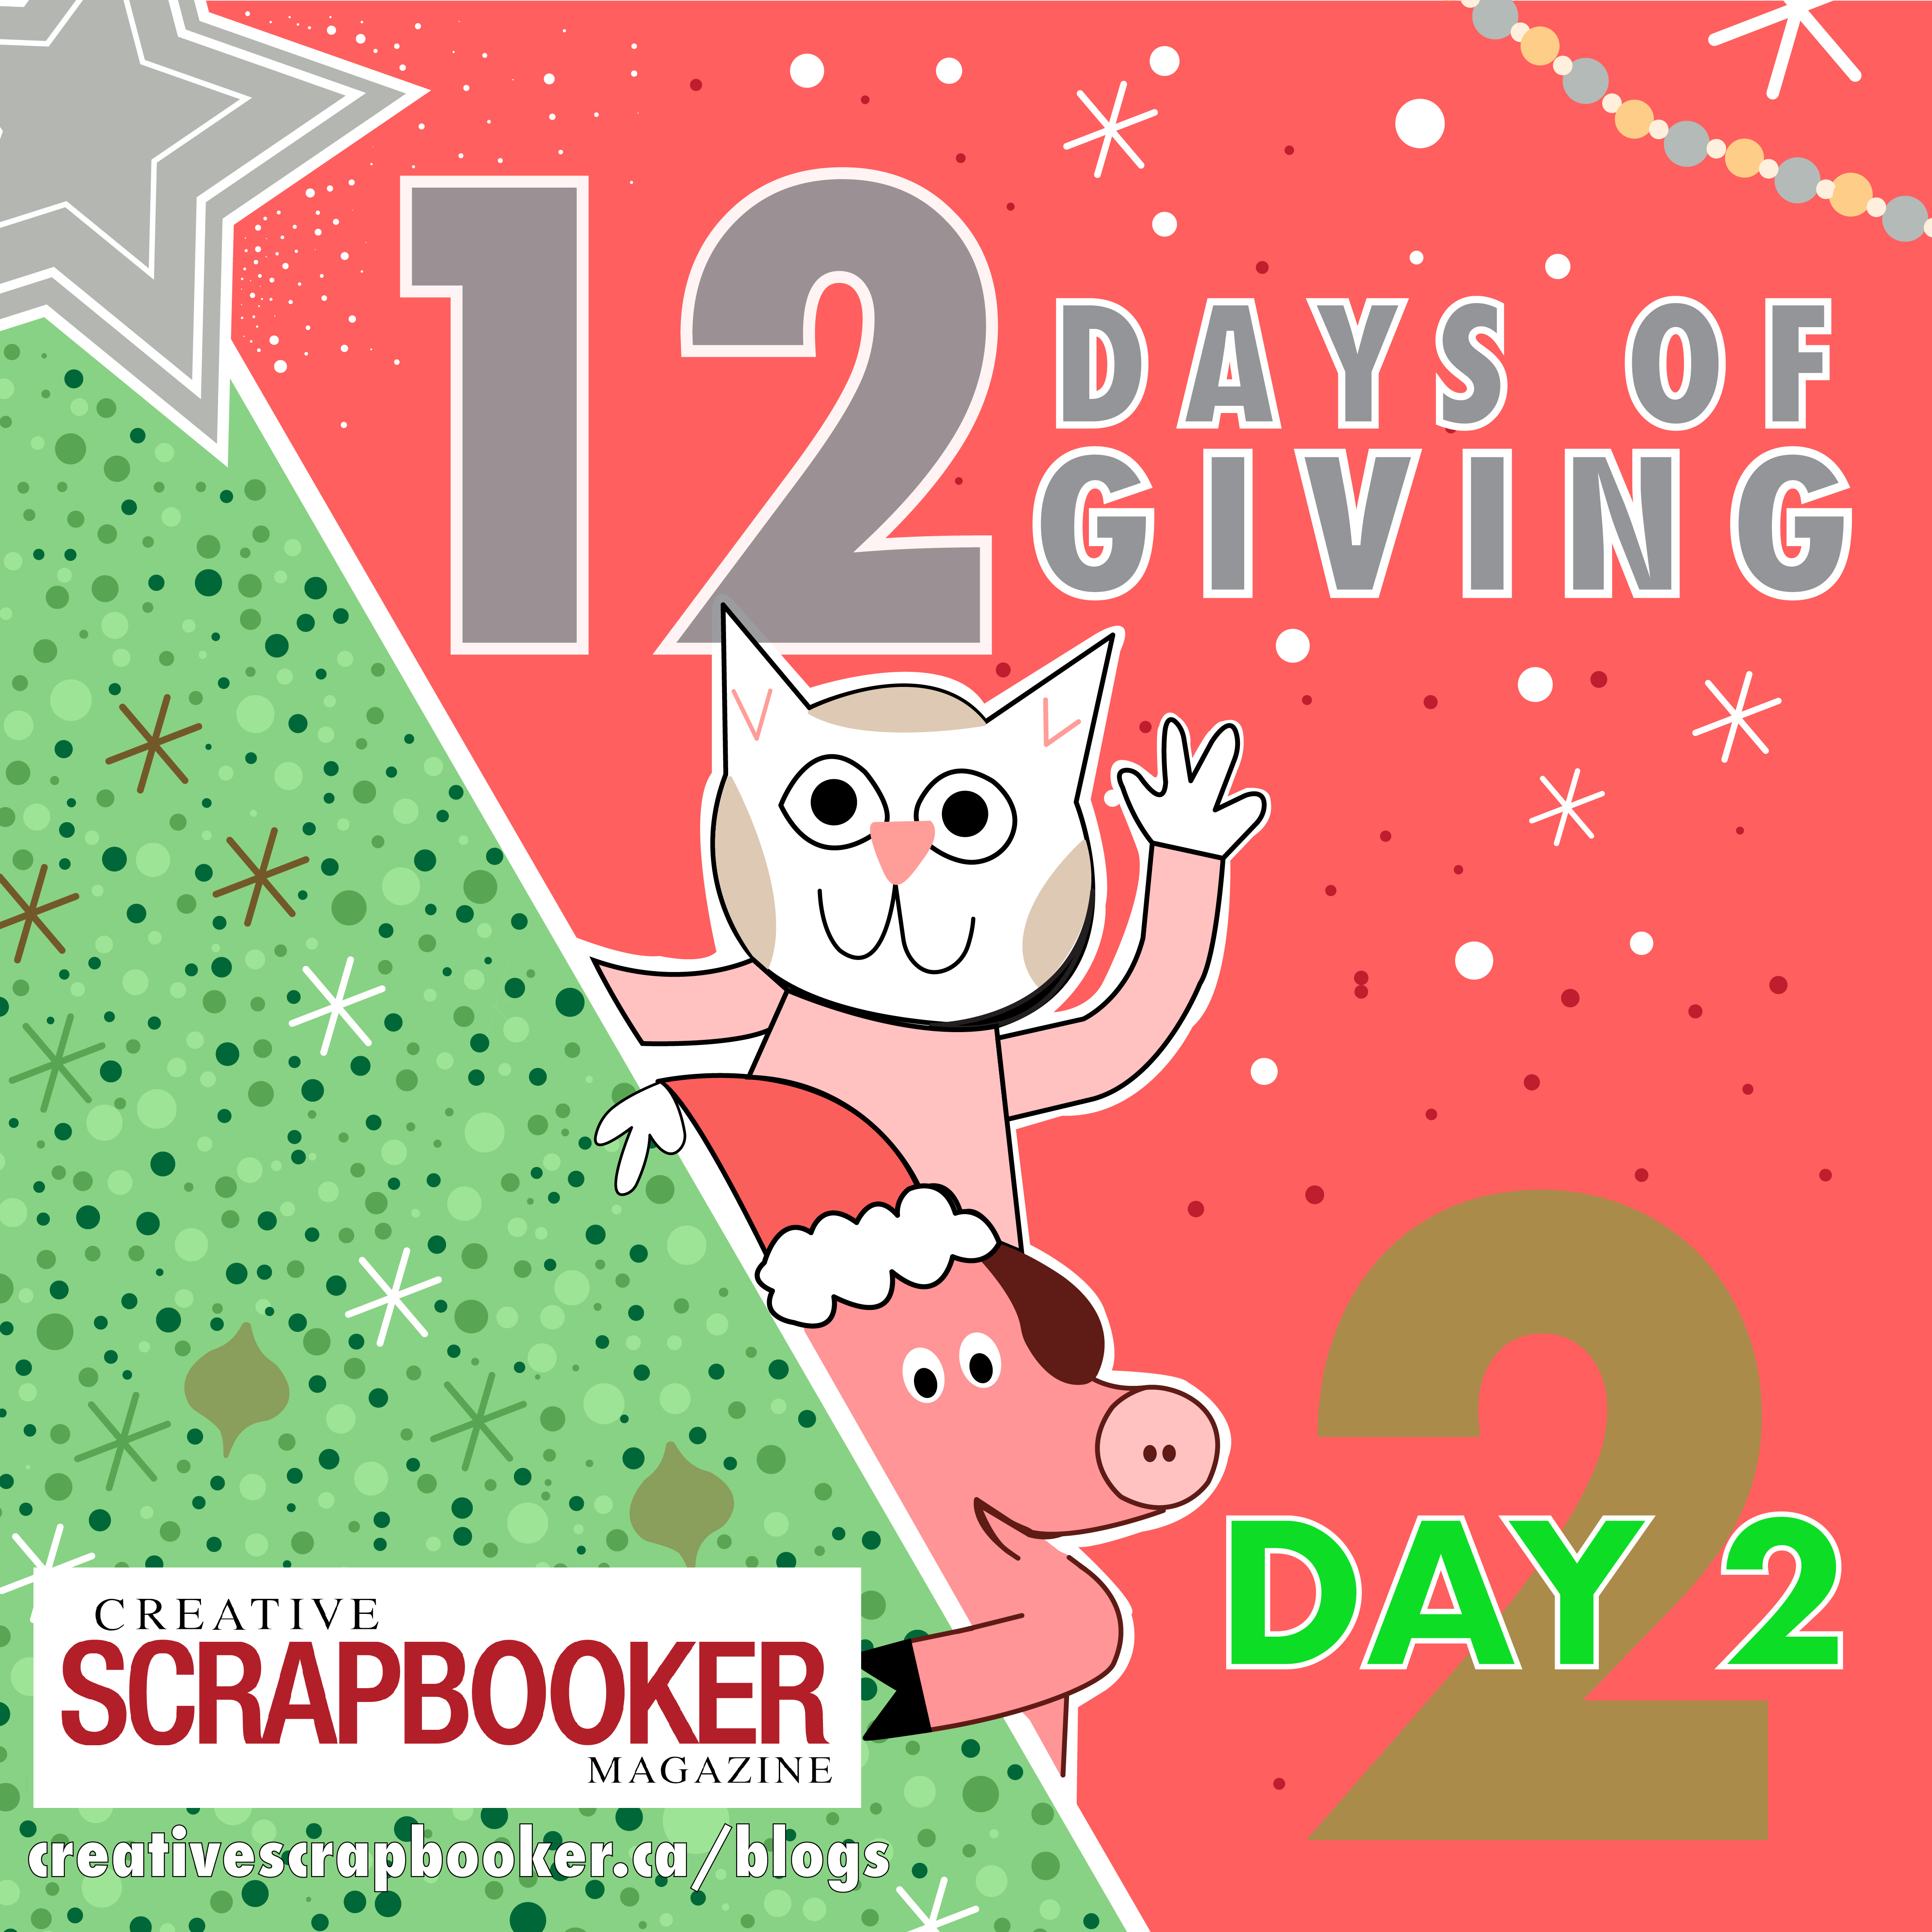 Day 2 12 Days of Giving Creative Scrapbooker Magazine